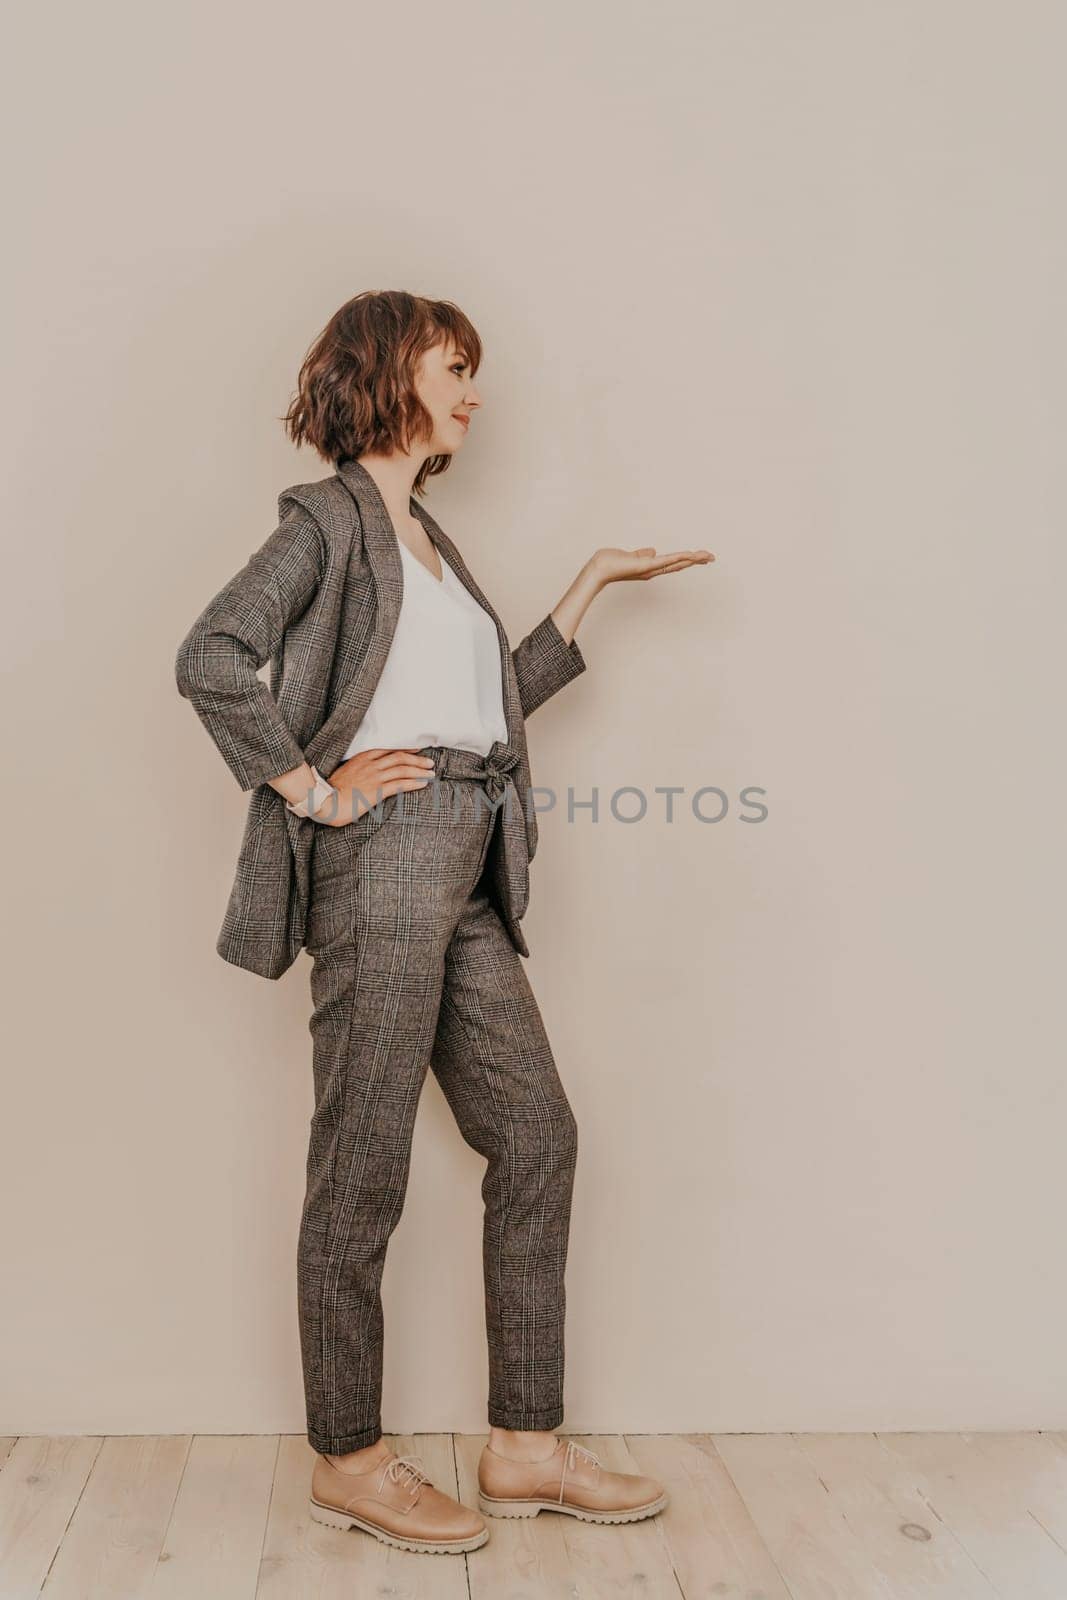 Brunette suit wall. Business woman in a beige suit posing on a beige background. Full length studio portrait